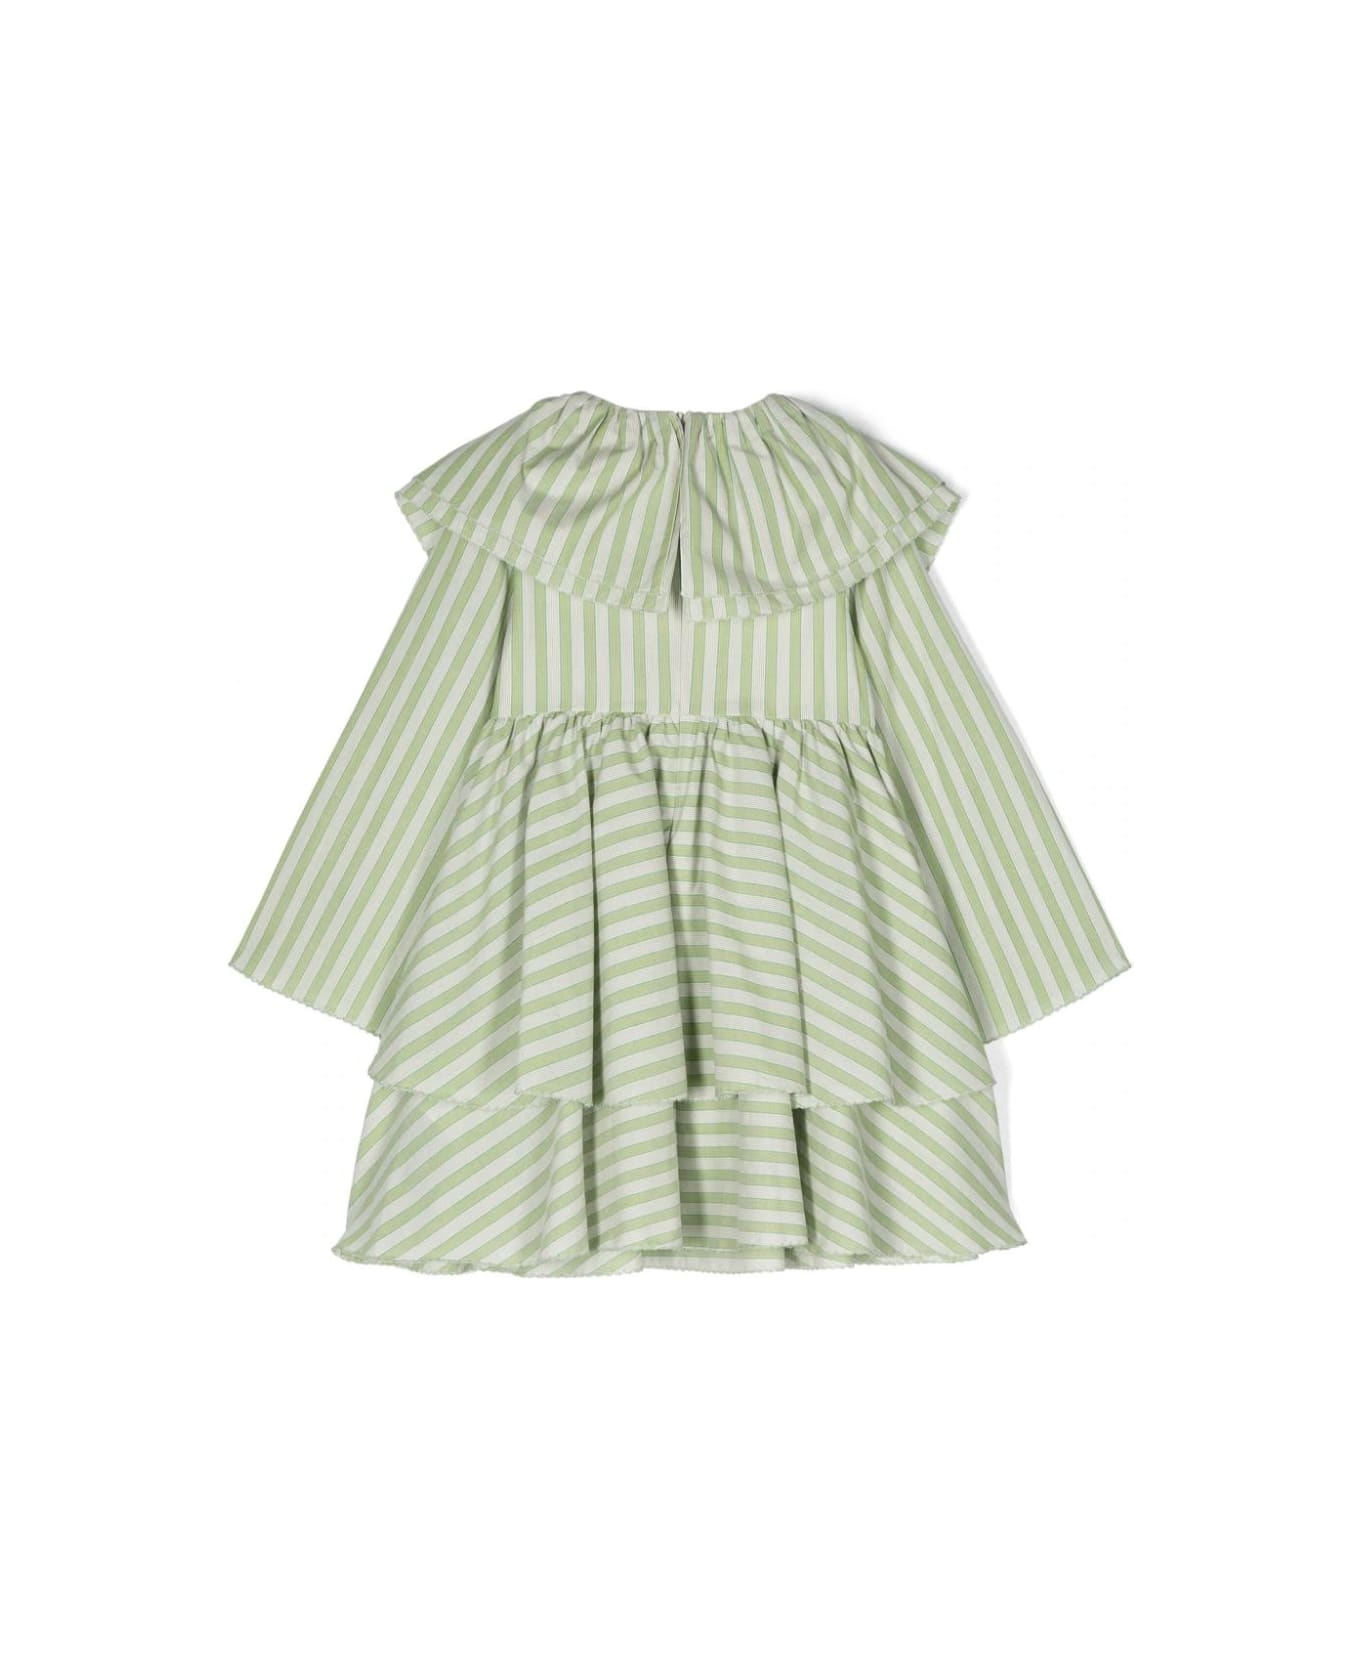 Etro Green Striped Dress With Ruffles - Green